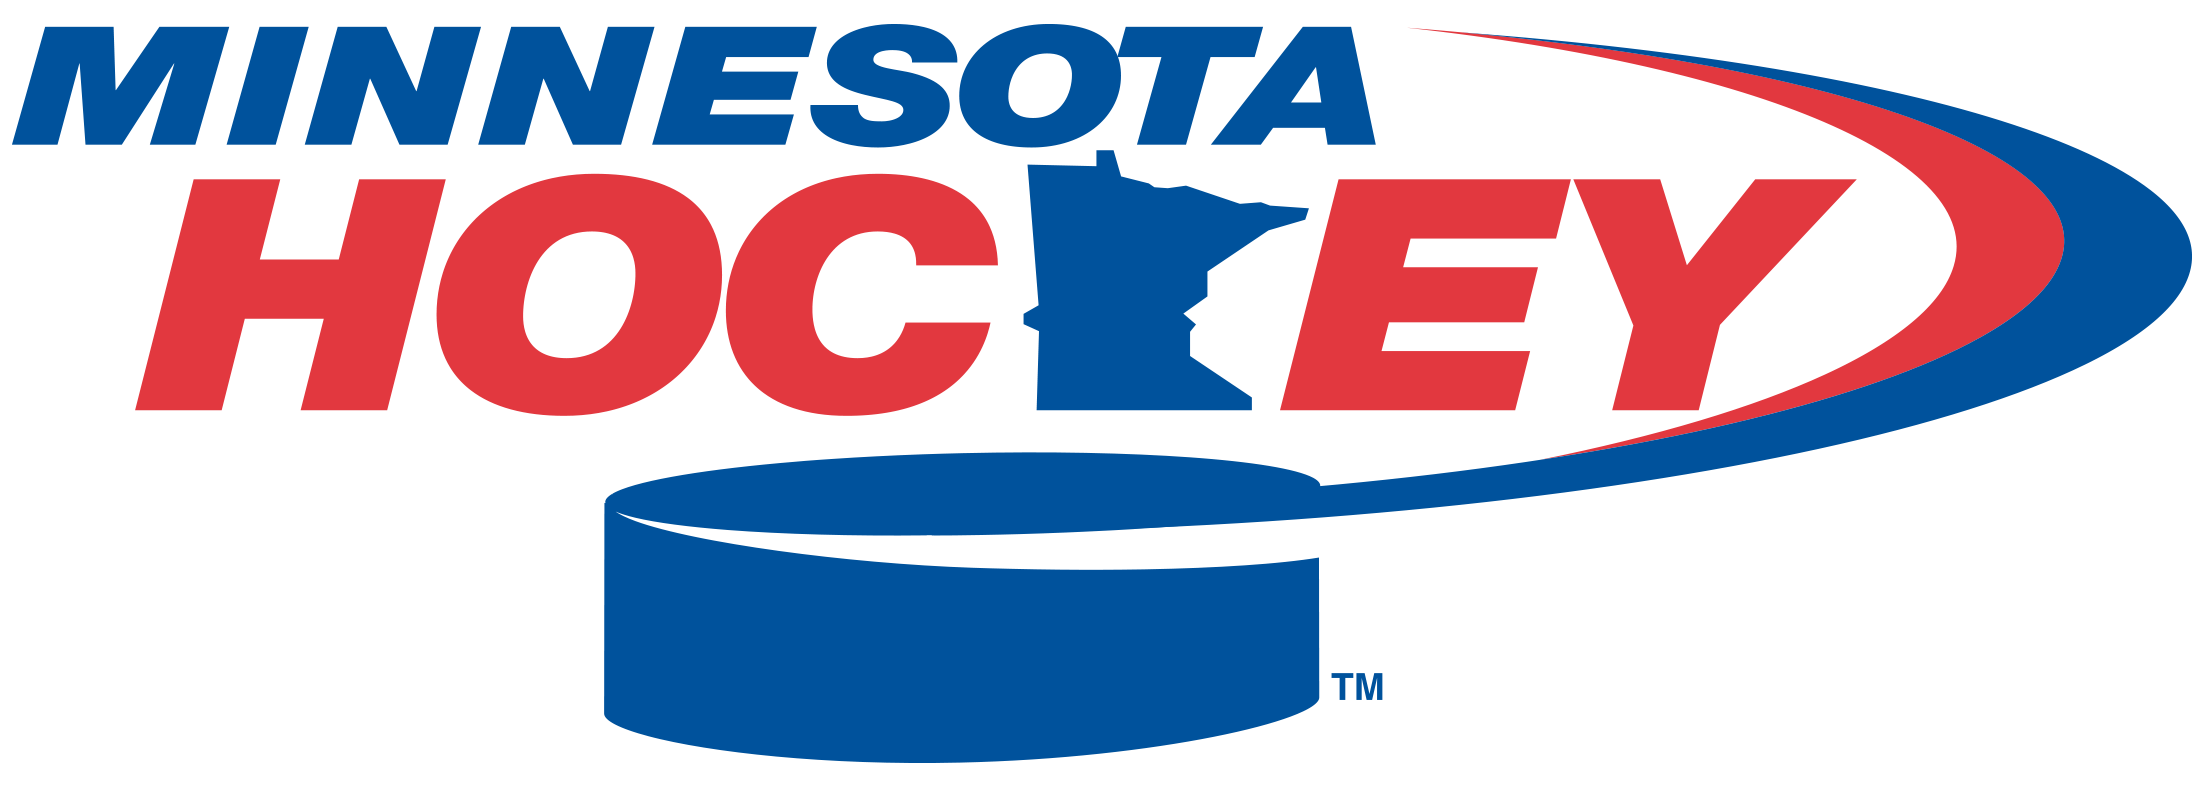 Minnesota Hockey - The Coaches Site Partner